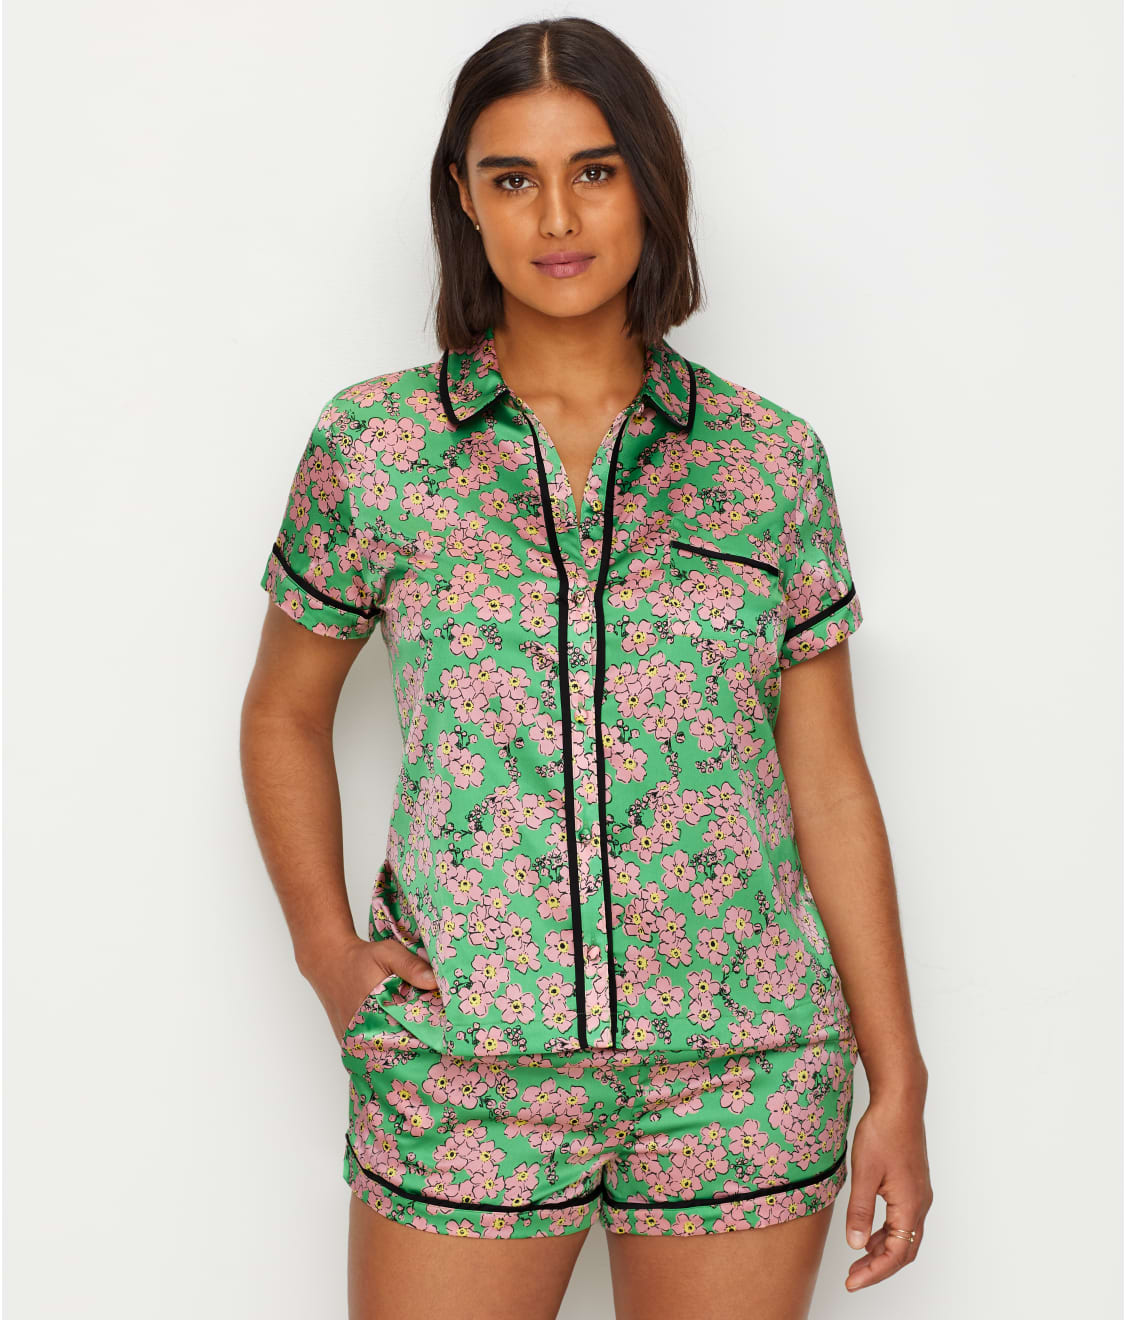 kate spade new york Charmeuse Floral Pajama Set & Reviews | Bare  Necessities (Style KS11760)